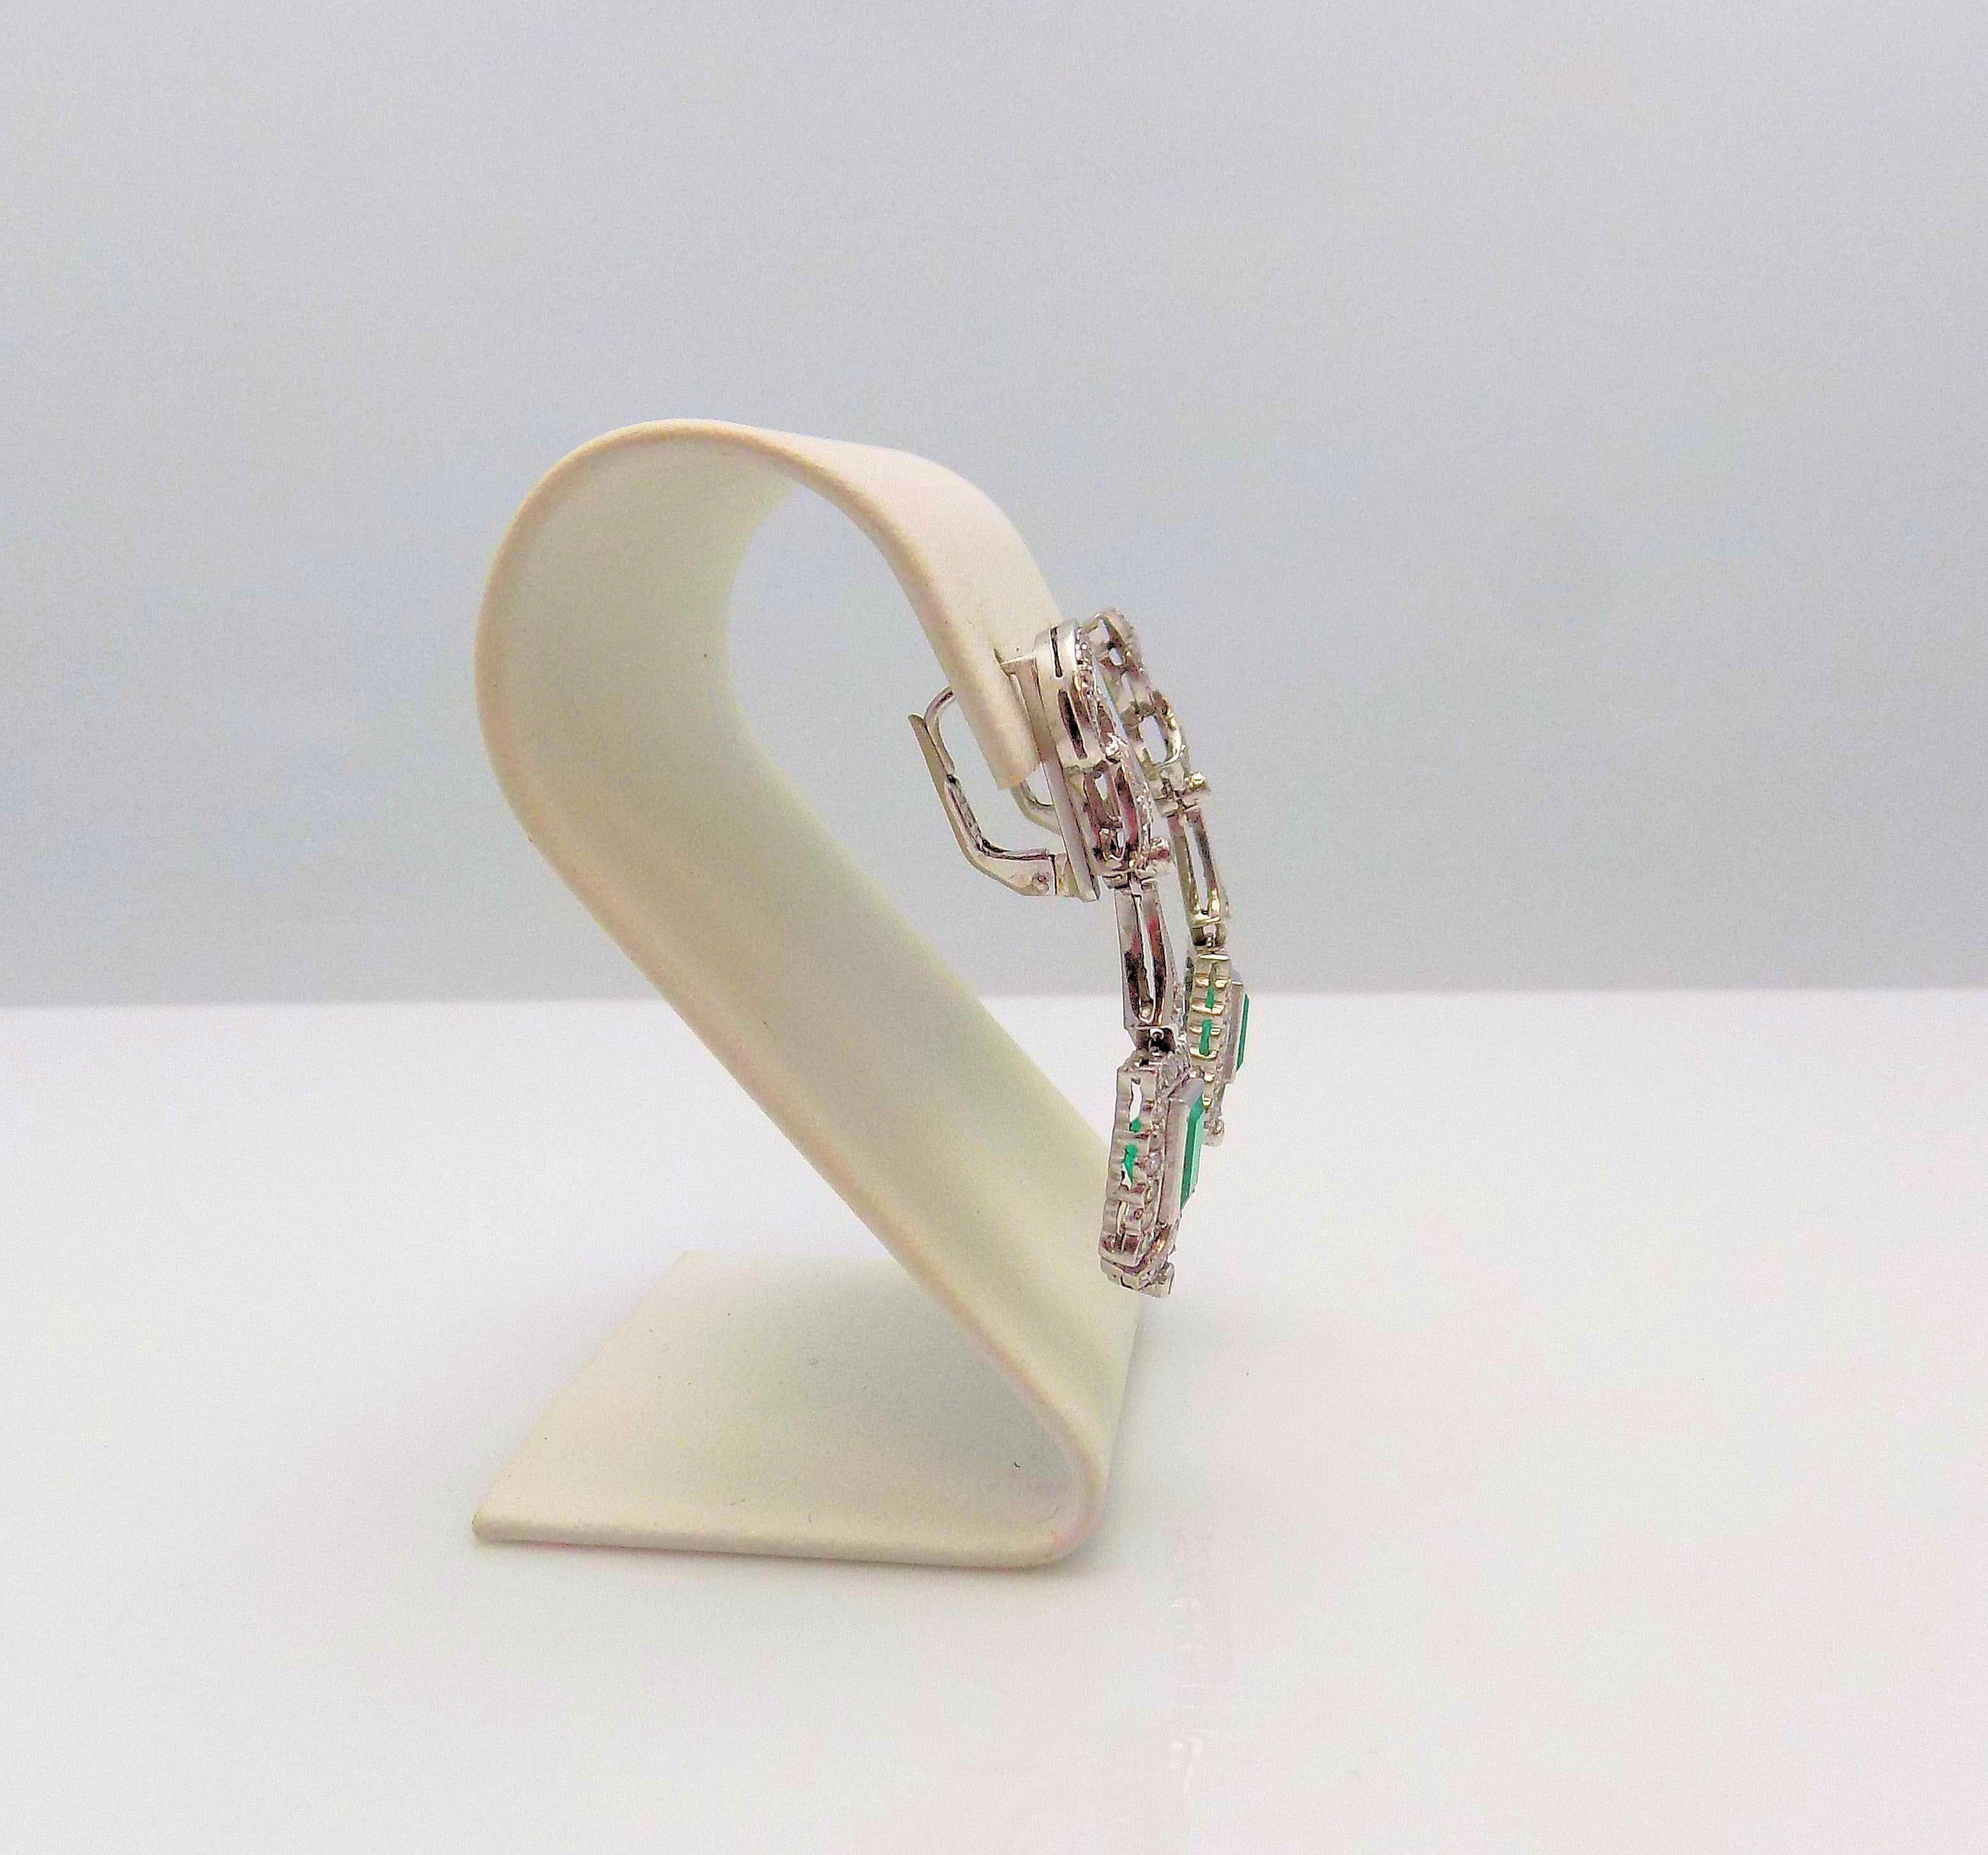 Pair 12 Karat White Gold Leverback Pendant-Style Earrings featuring 2 Rectangular Emeralds 1.75 Carat Total Weight; 65 Single Cut Diamonds (1 Missing) 0.55 Carat Total Weight, SI, H; 4.2 DWT or 6.53 Grams.